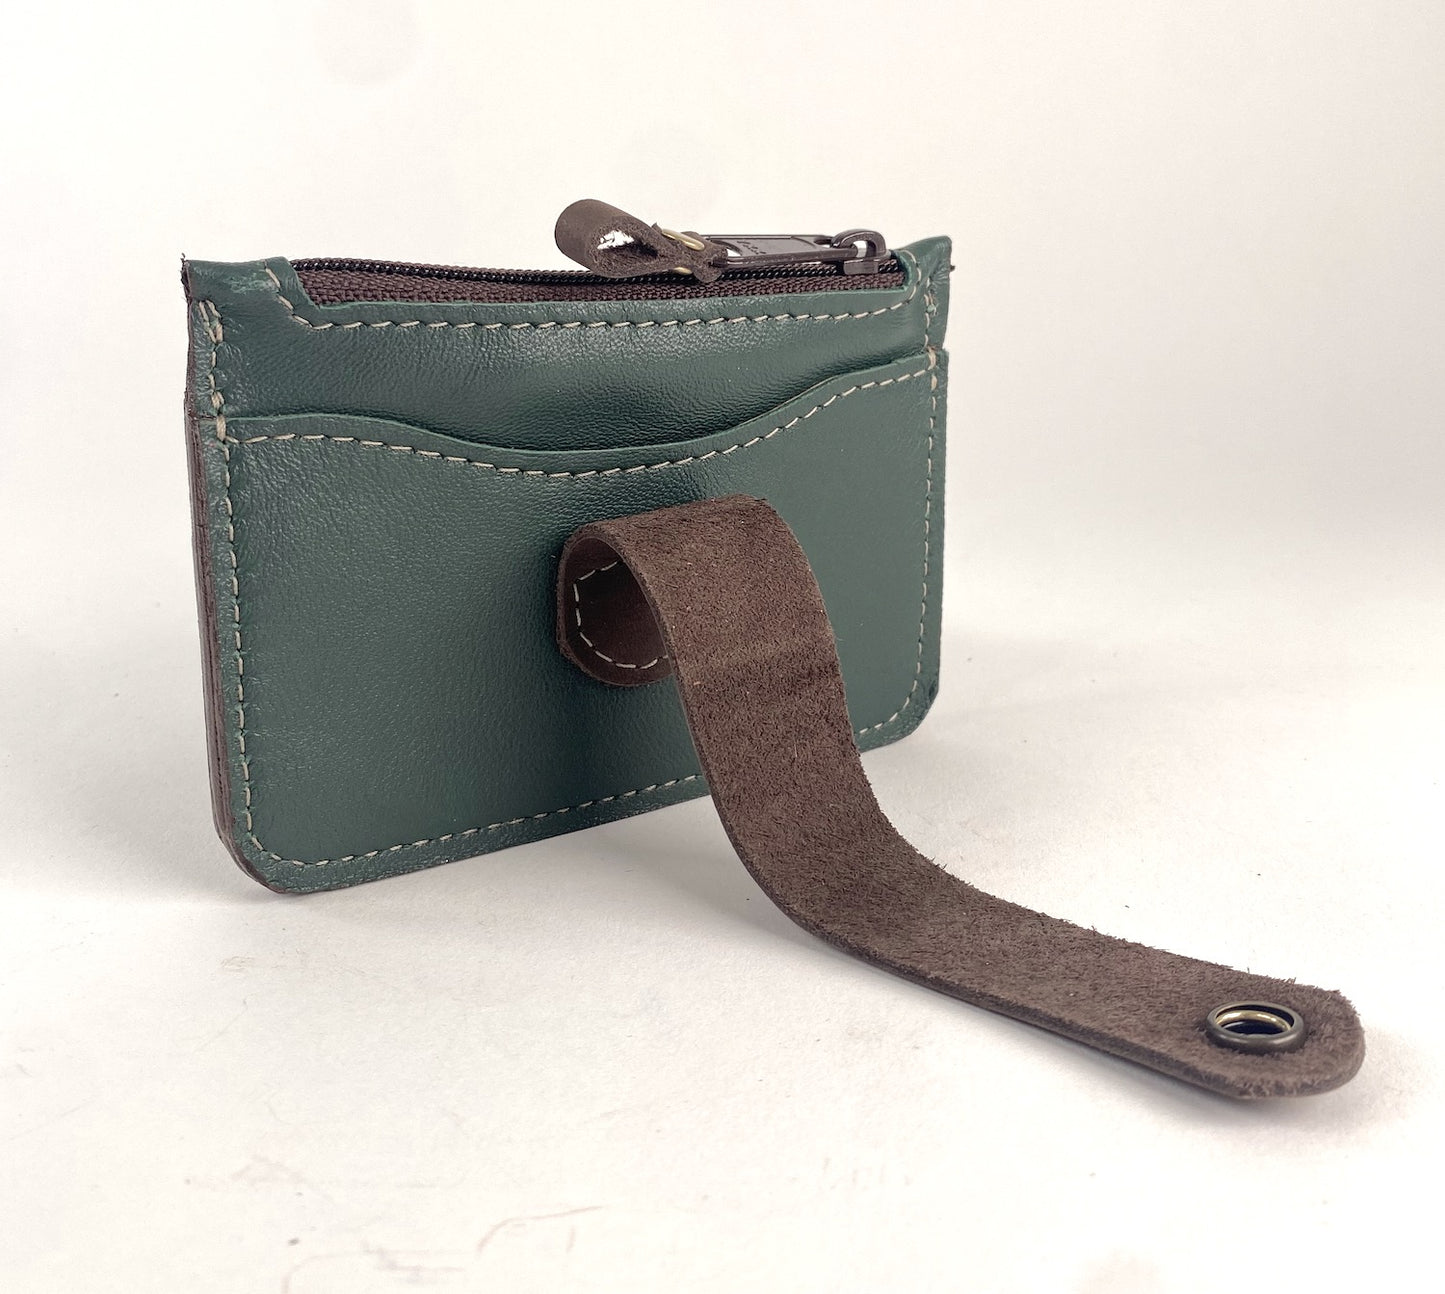 CardGuard Minimalist Leather Wallet in Pine Green